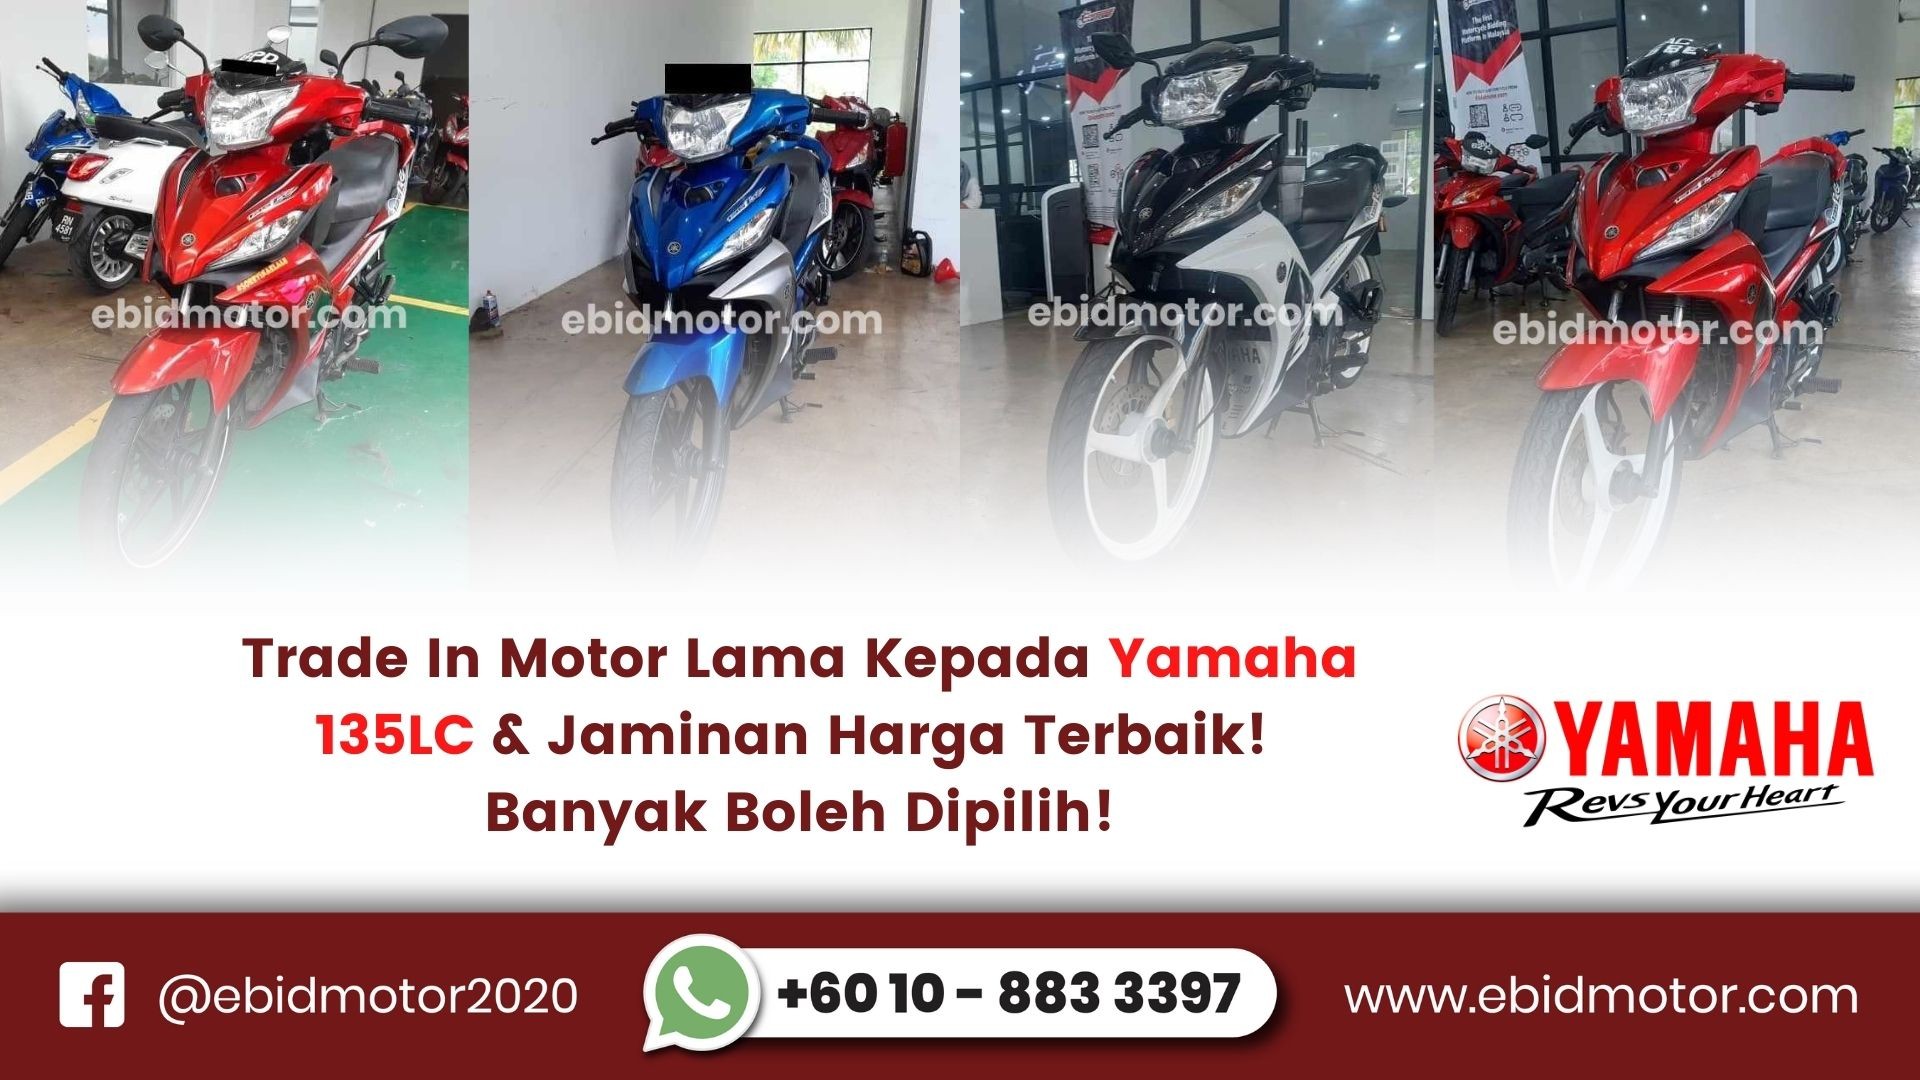 Senarai Motosikal Yamaha 135LC tahun 2011 - 2017 (RM2,600 - RM4,900). Semua harga bawah pasaran!